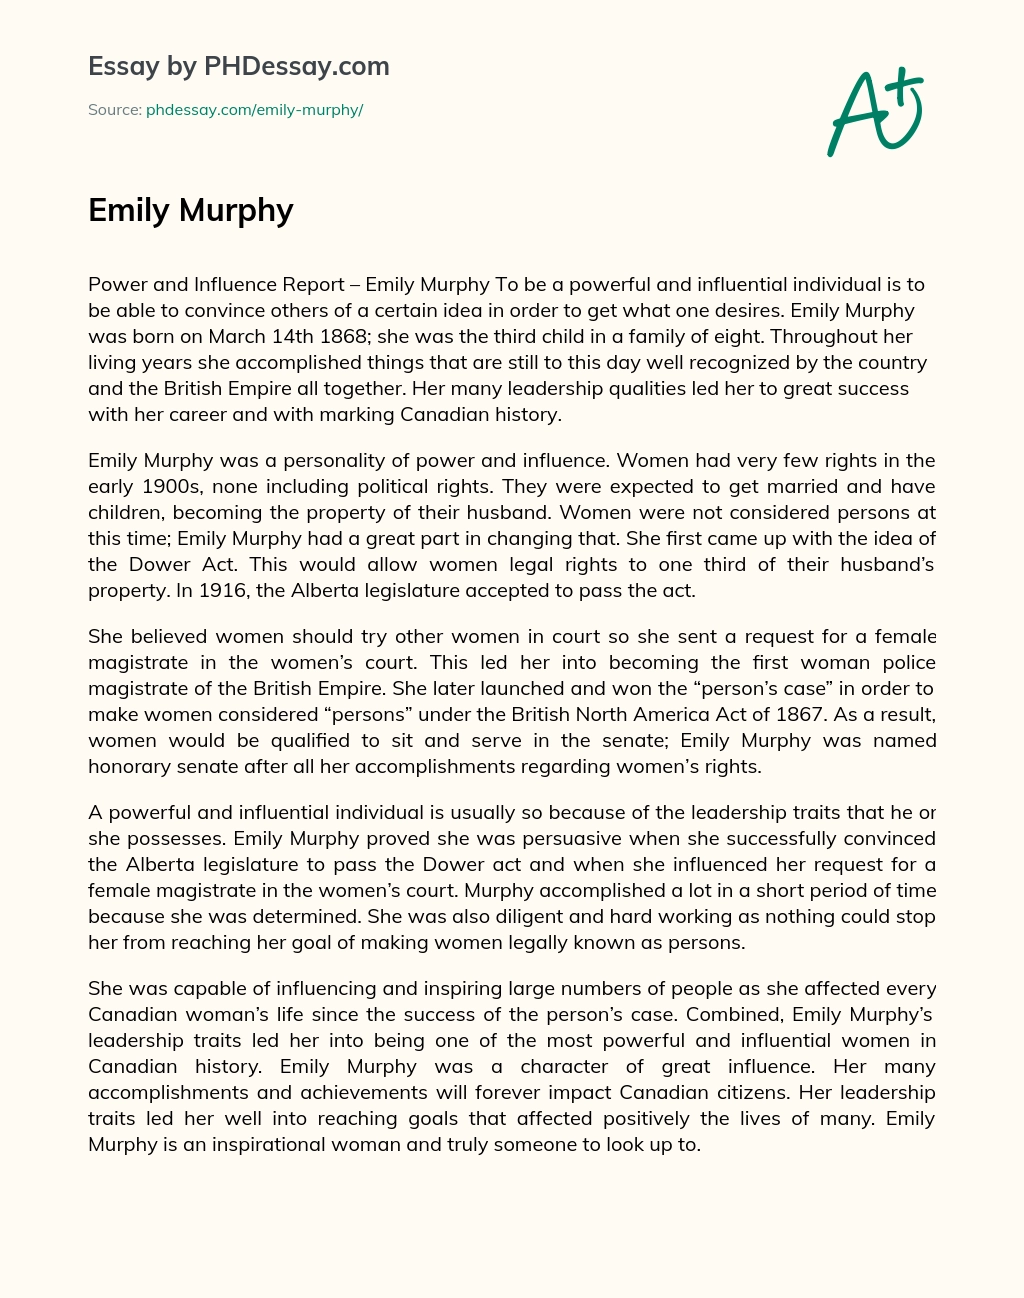 Emily Murphy essay